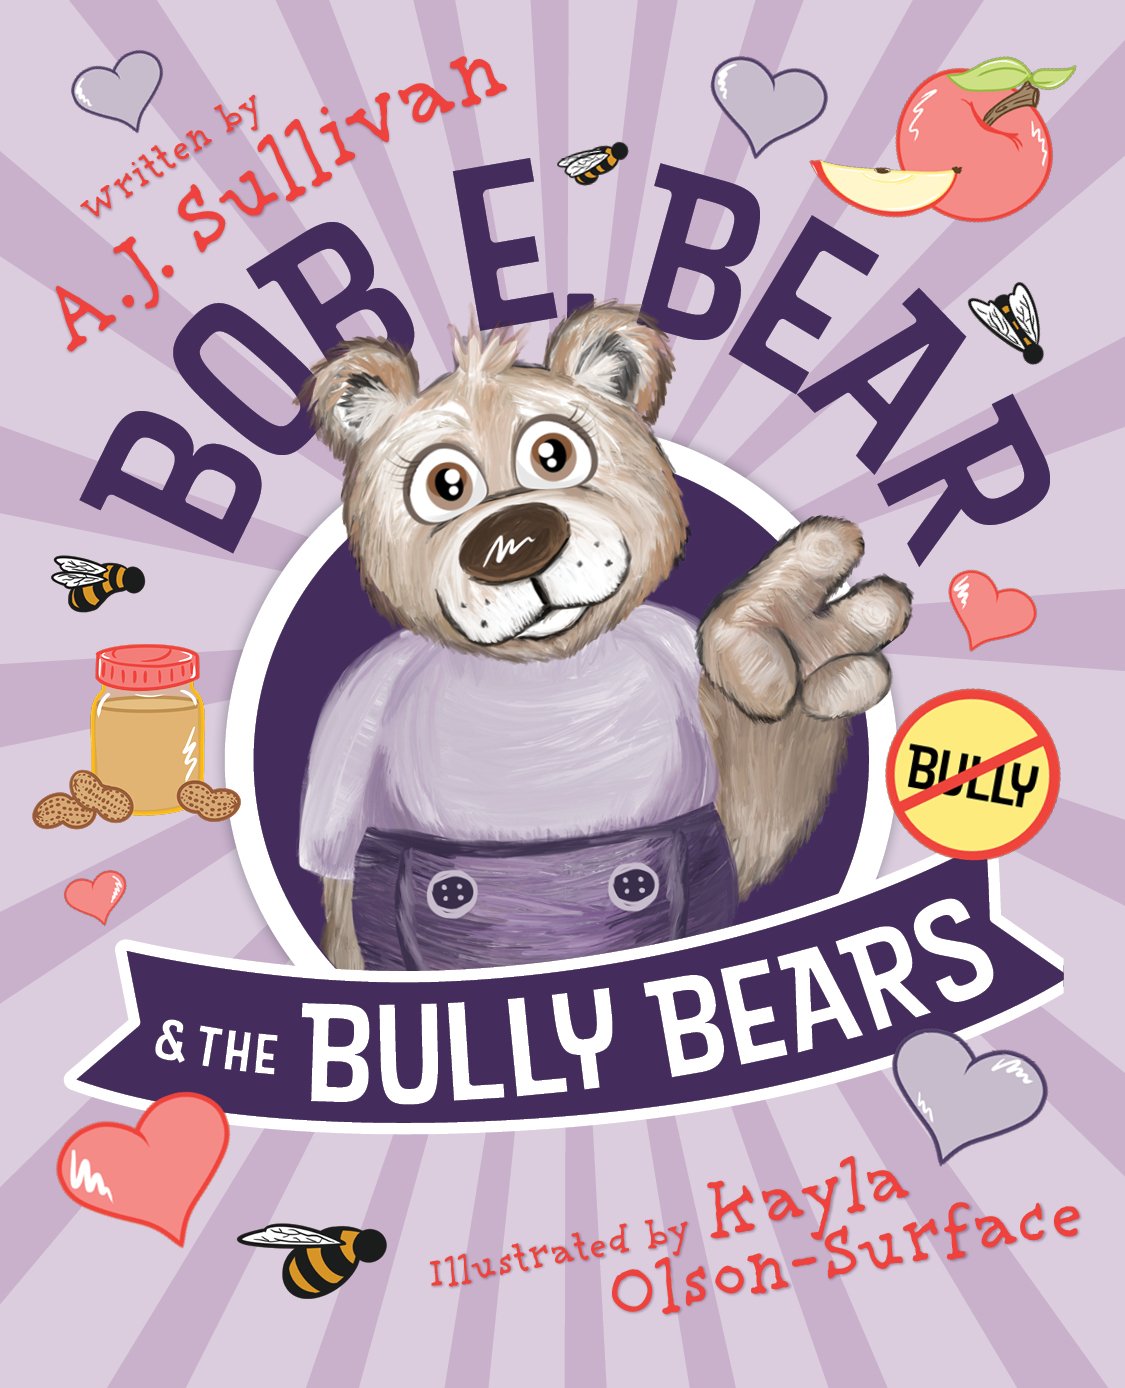 Bob_E_Bear_Bully_Bears_Cover_promo.jpg